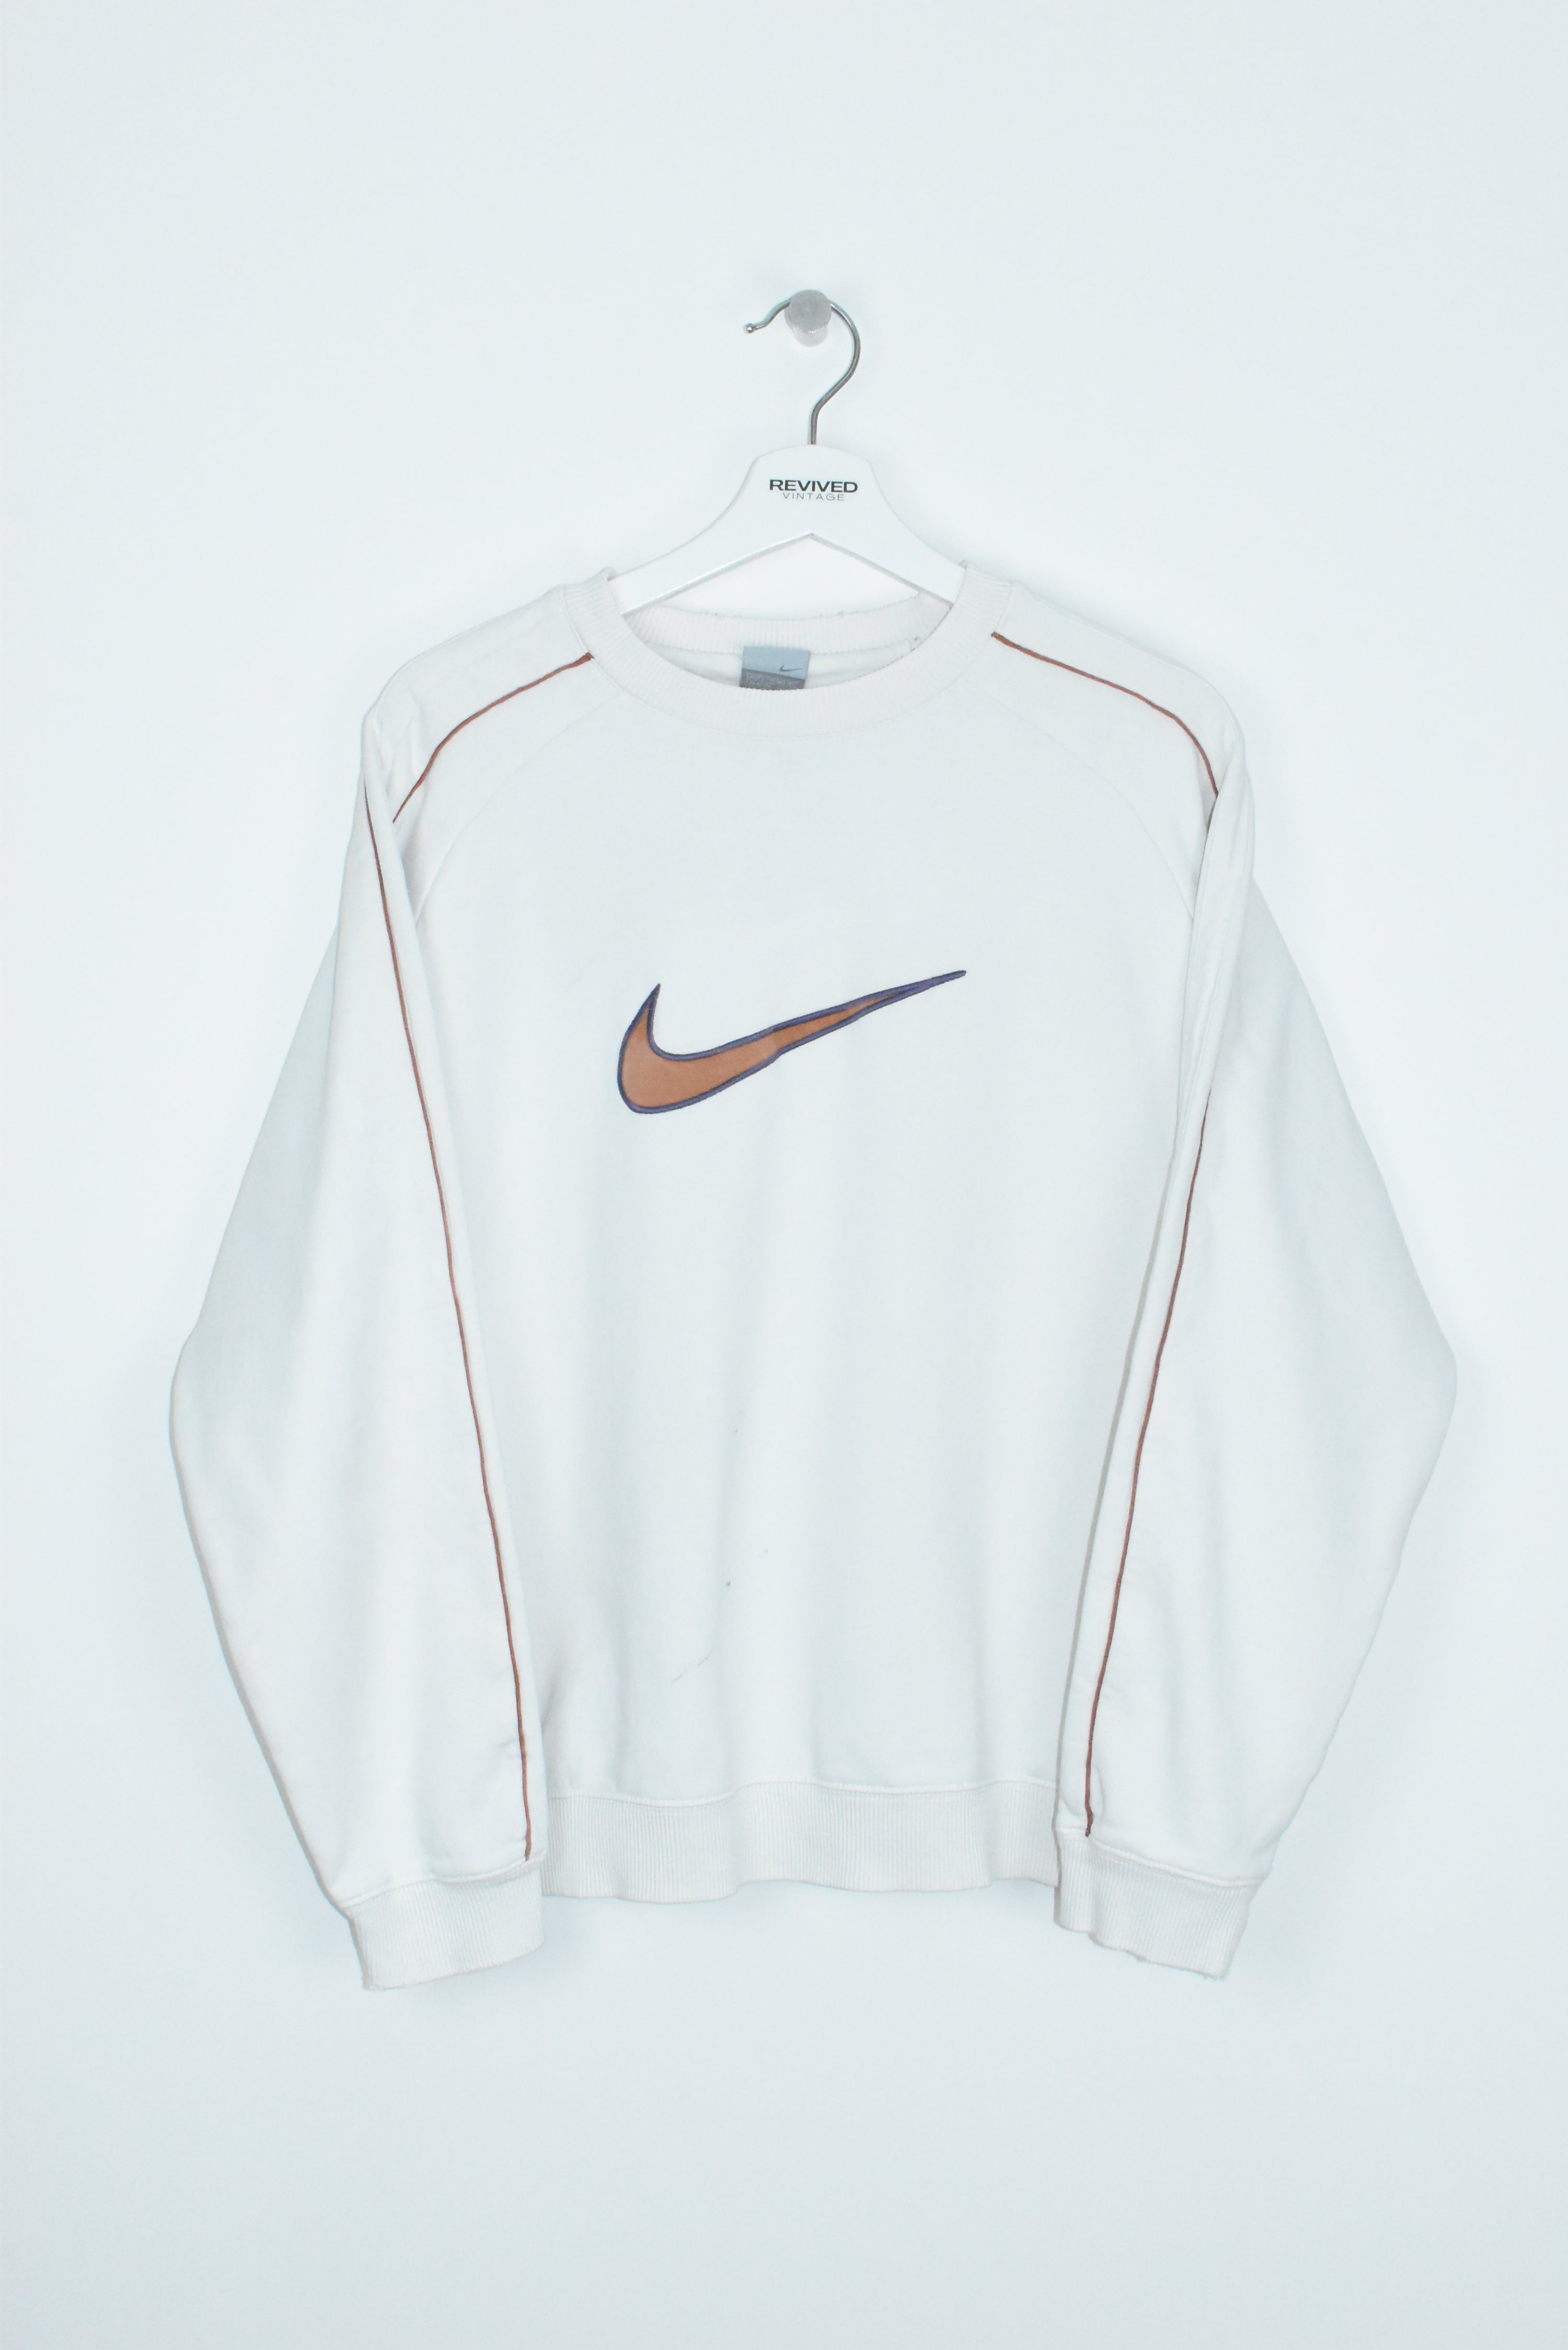 Vintage Nike 90S Embroidery Swoosh Sweatshirt Large